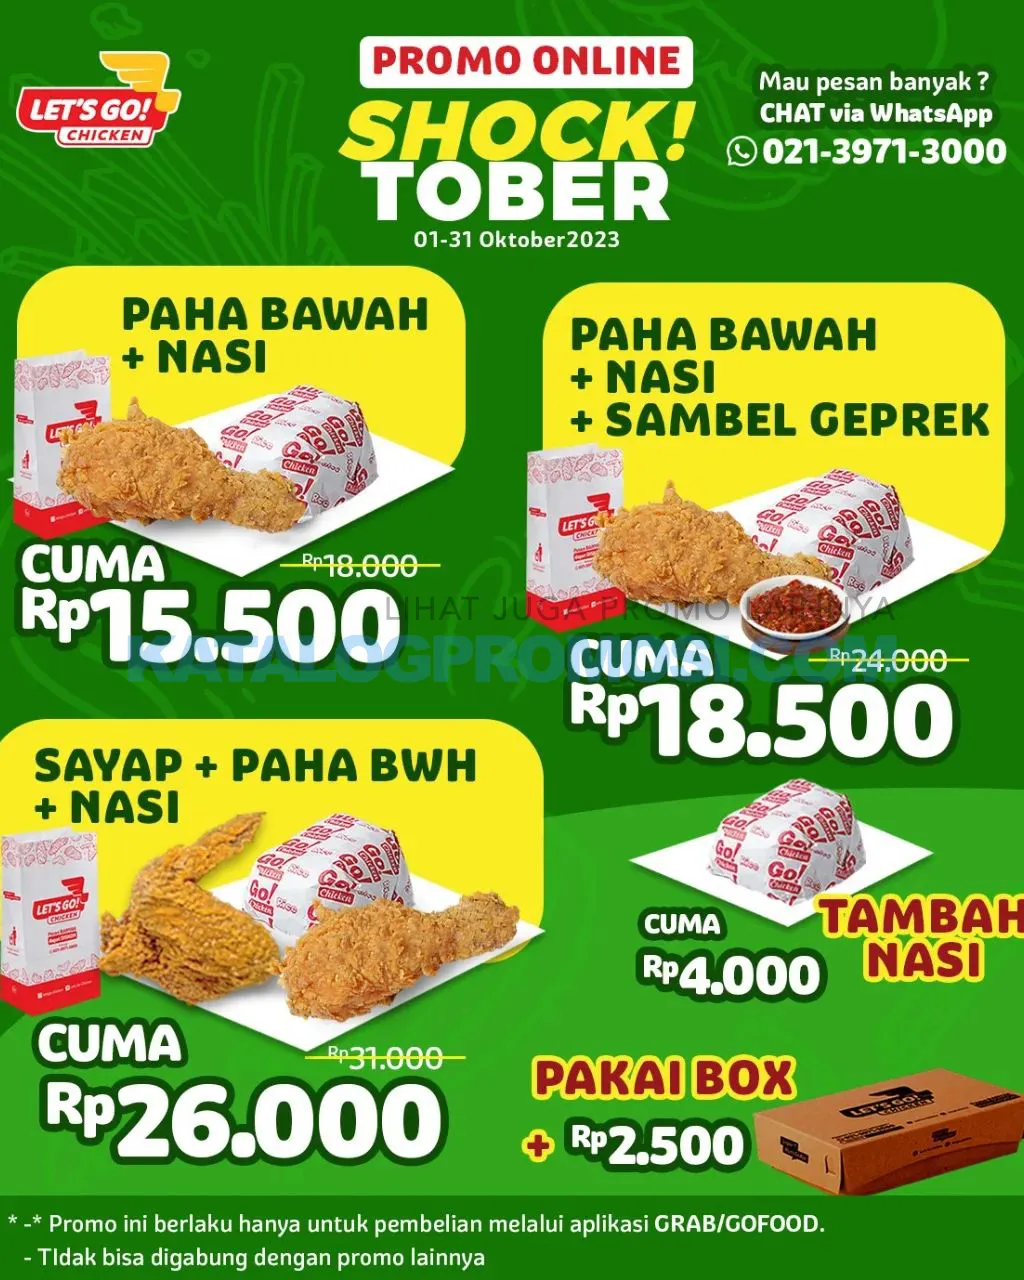 Promo LET'S GO CHICKEN SHOCKTOBER - Harga Spesial Paket Nasi + Ayam mulai dari Rp. 10.500